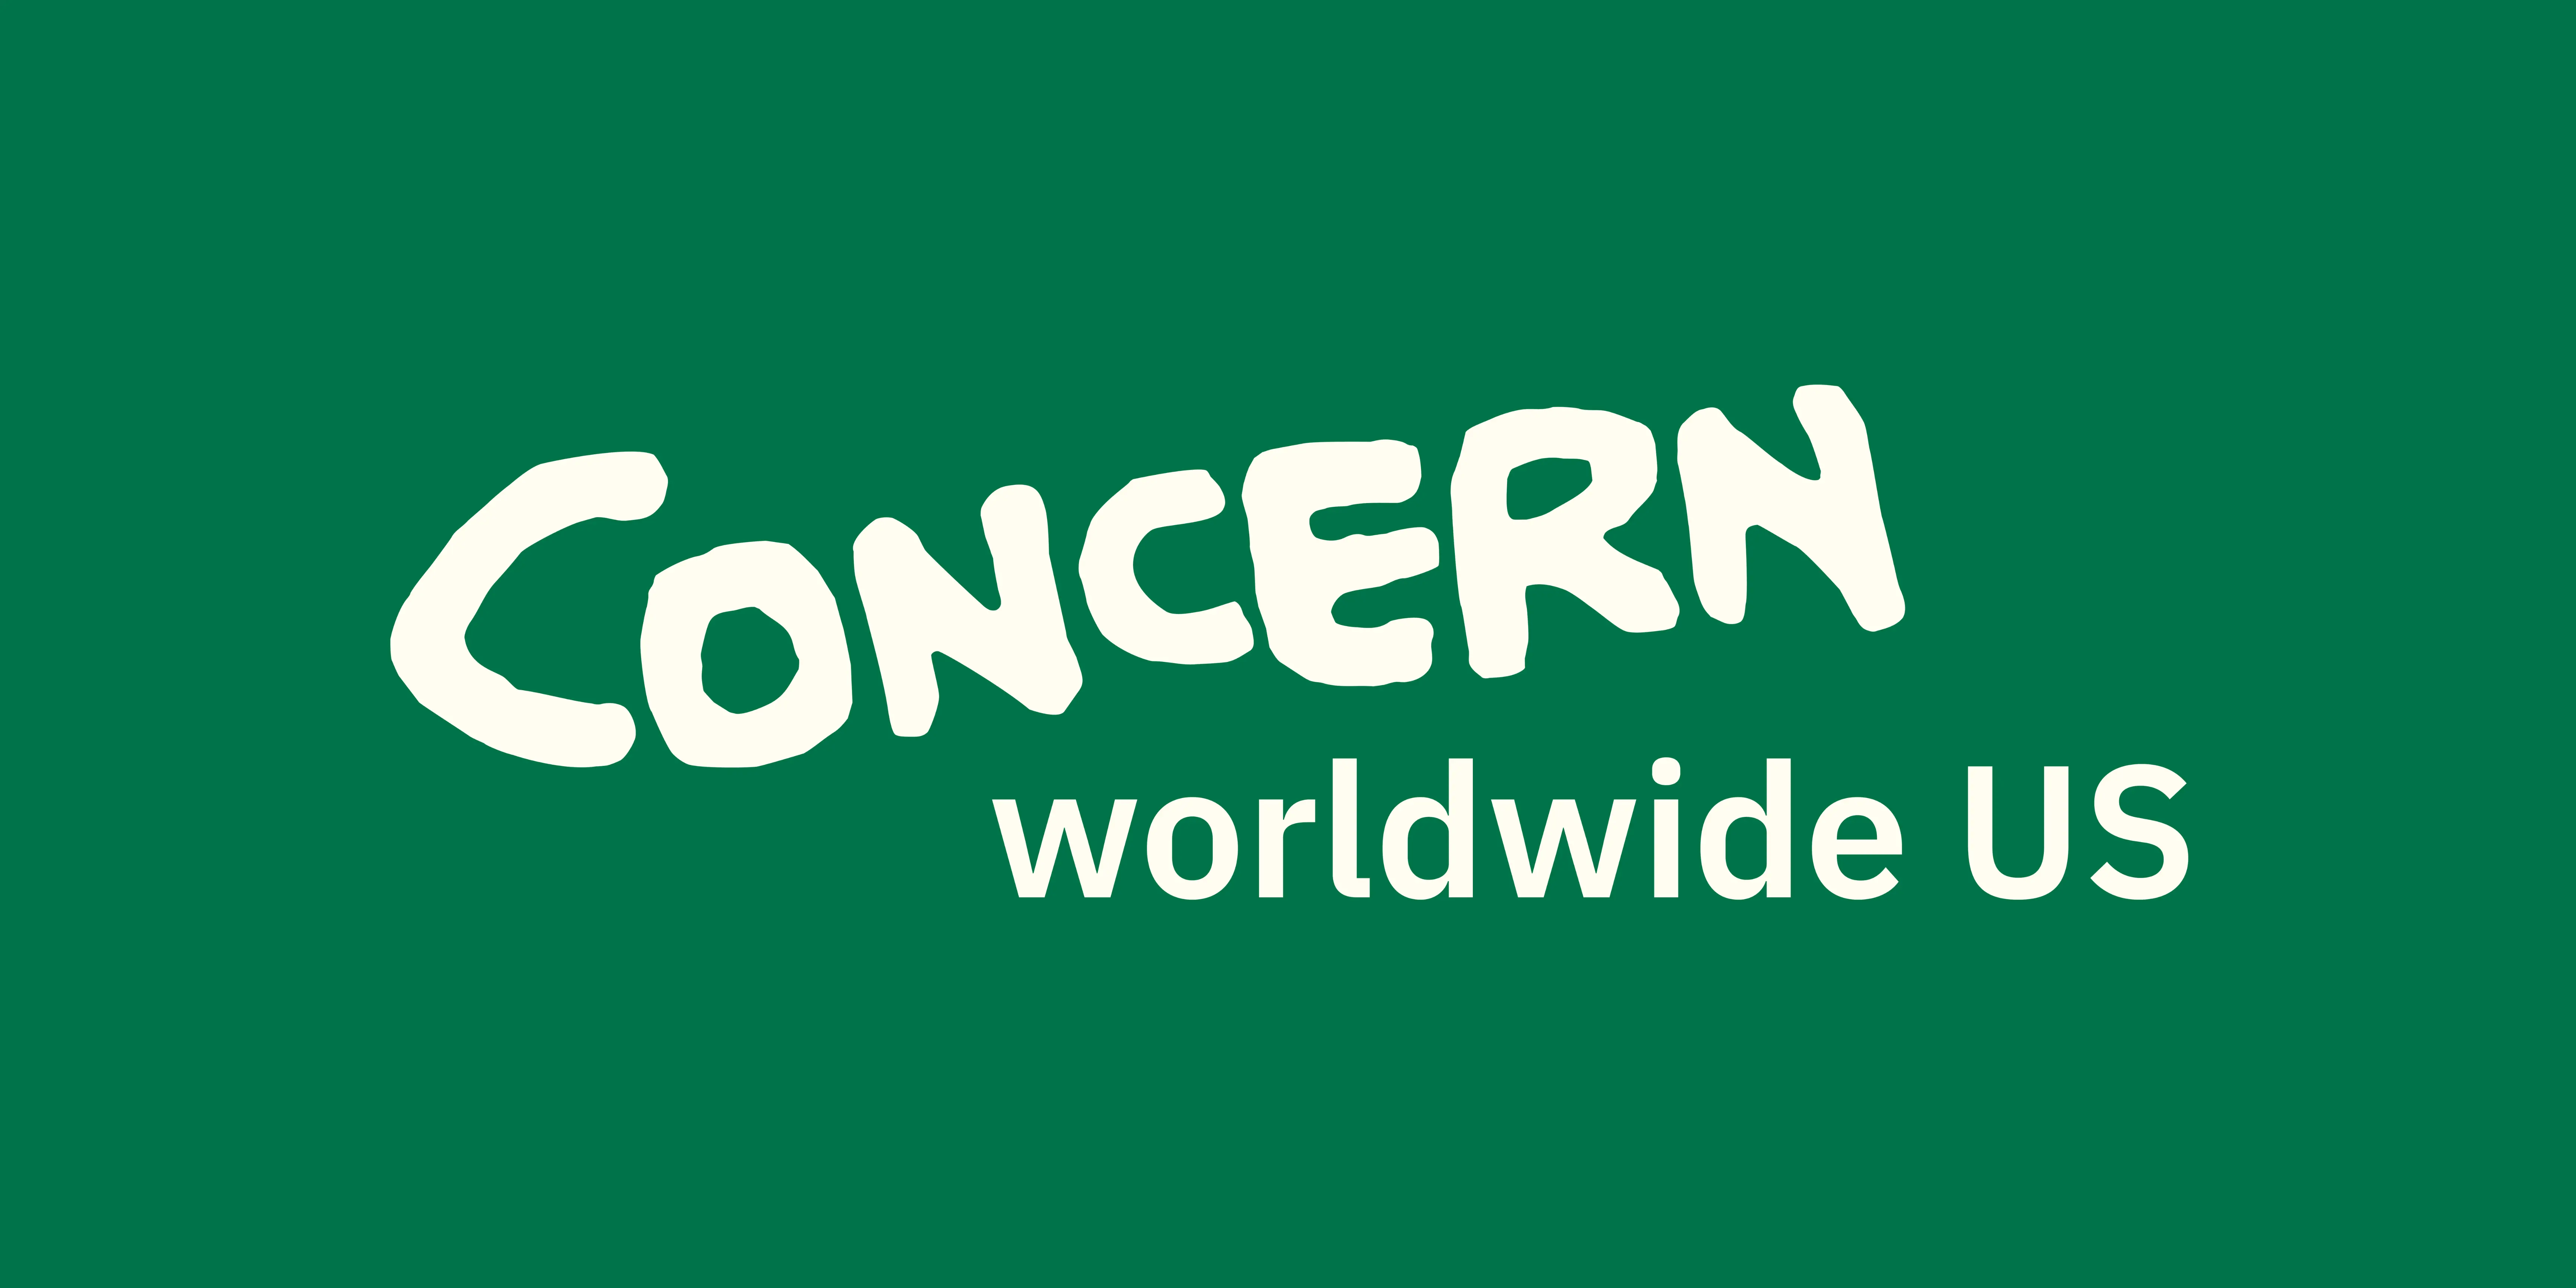 Homepage of new concern worldwide us website